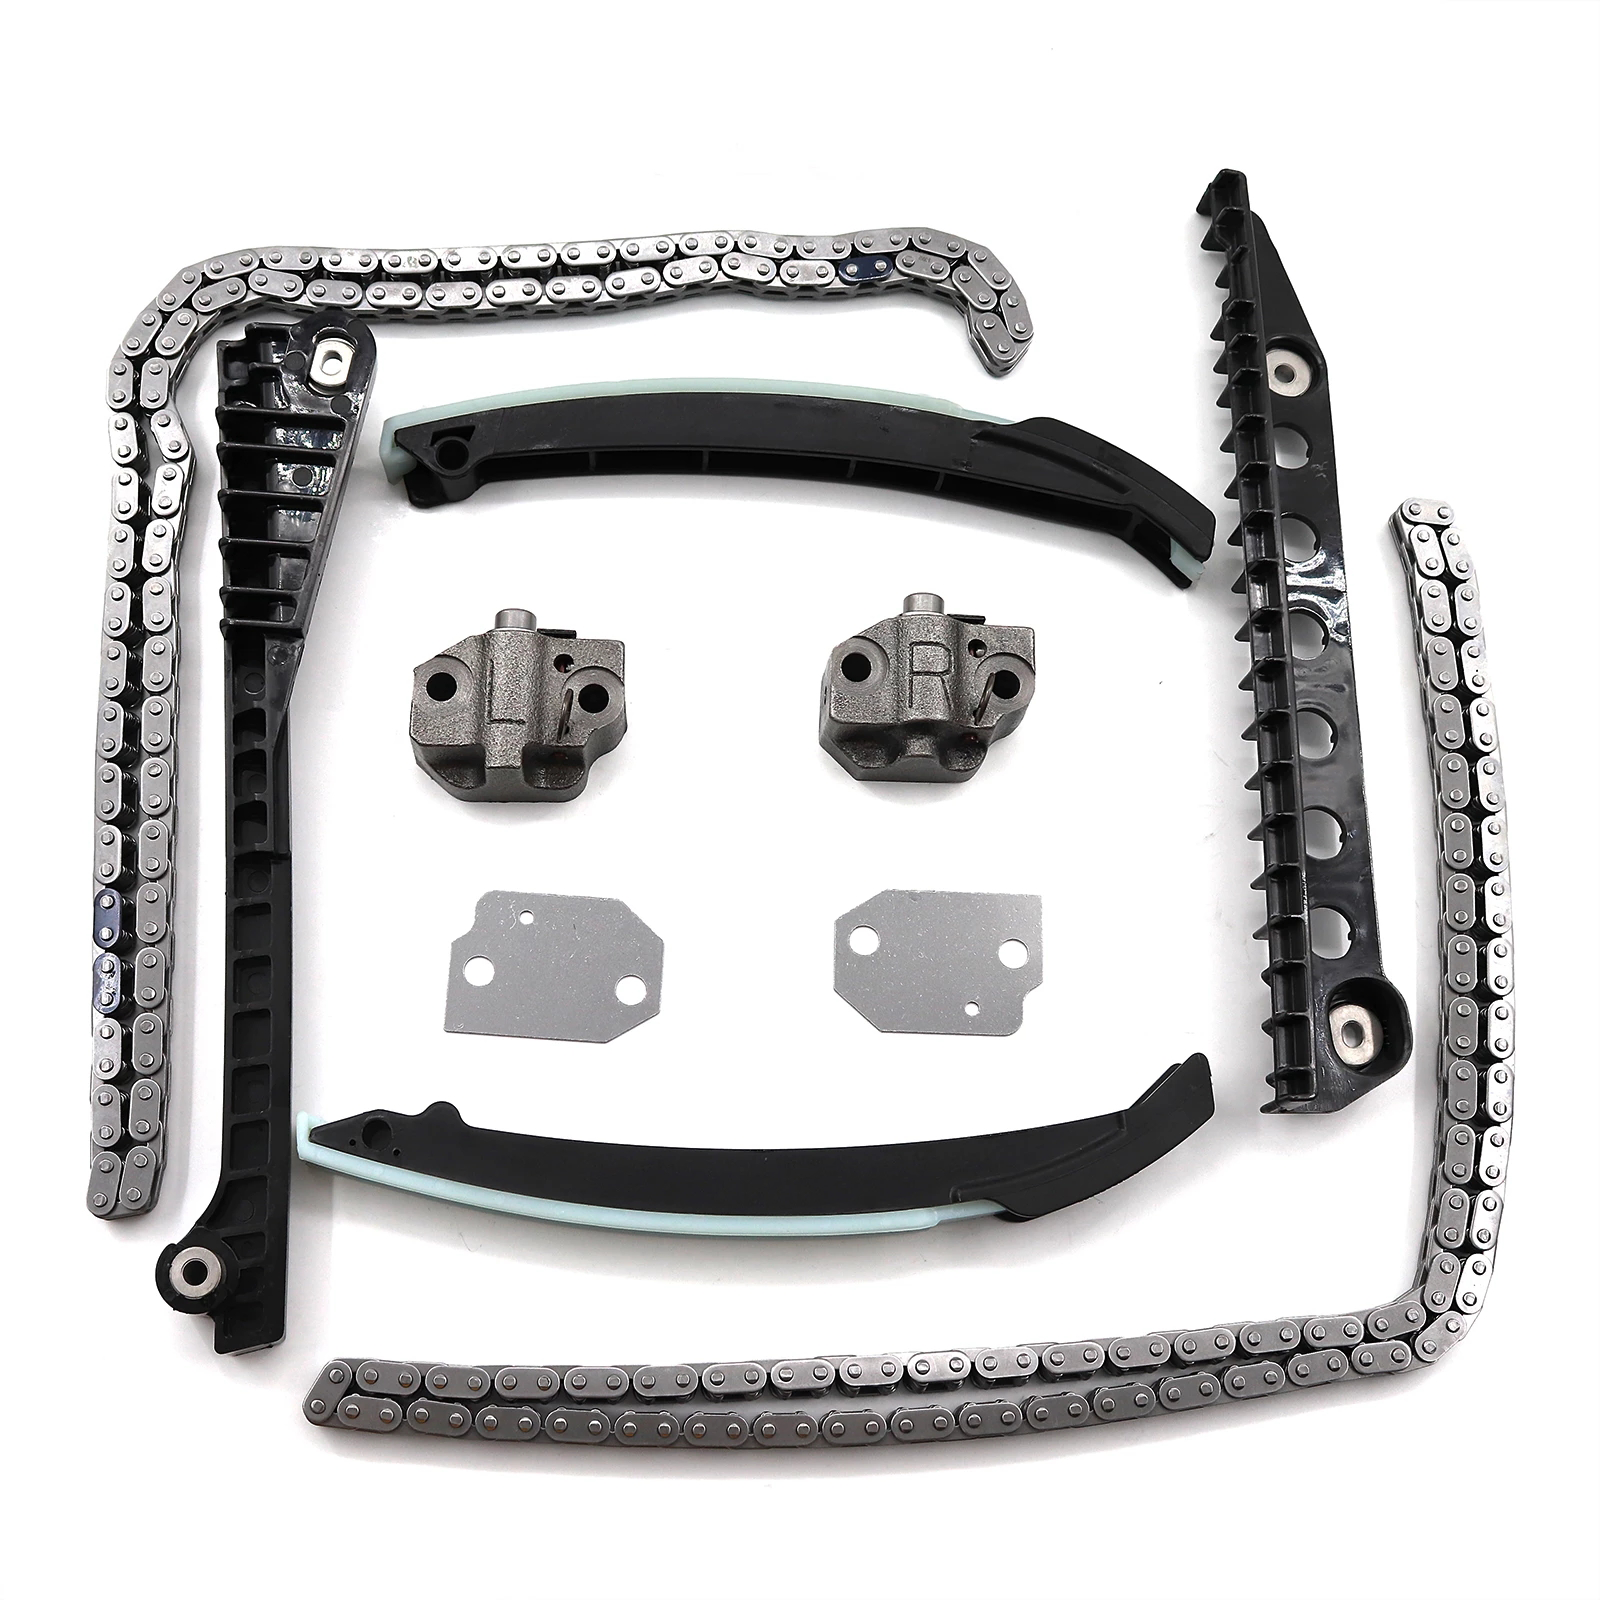 Timing Chain Kit Gears Fit 97-04 Ford 5.4 F150 F250 F350 E150 E250 E350